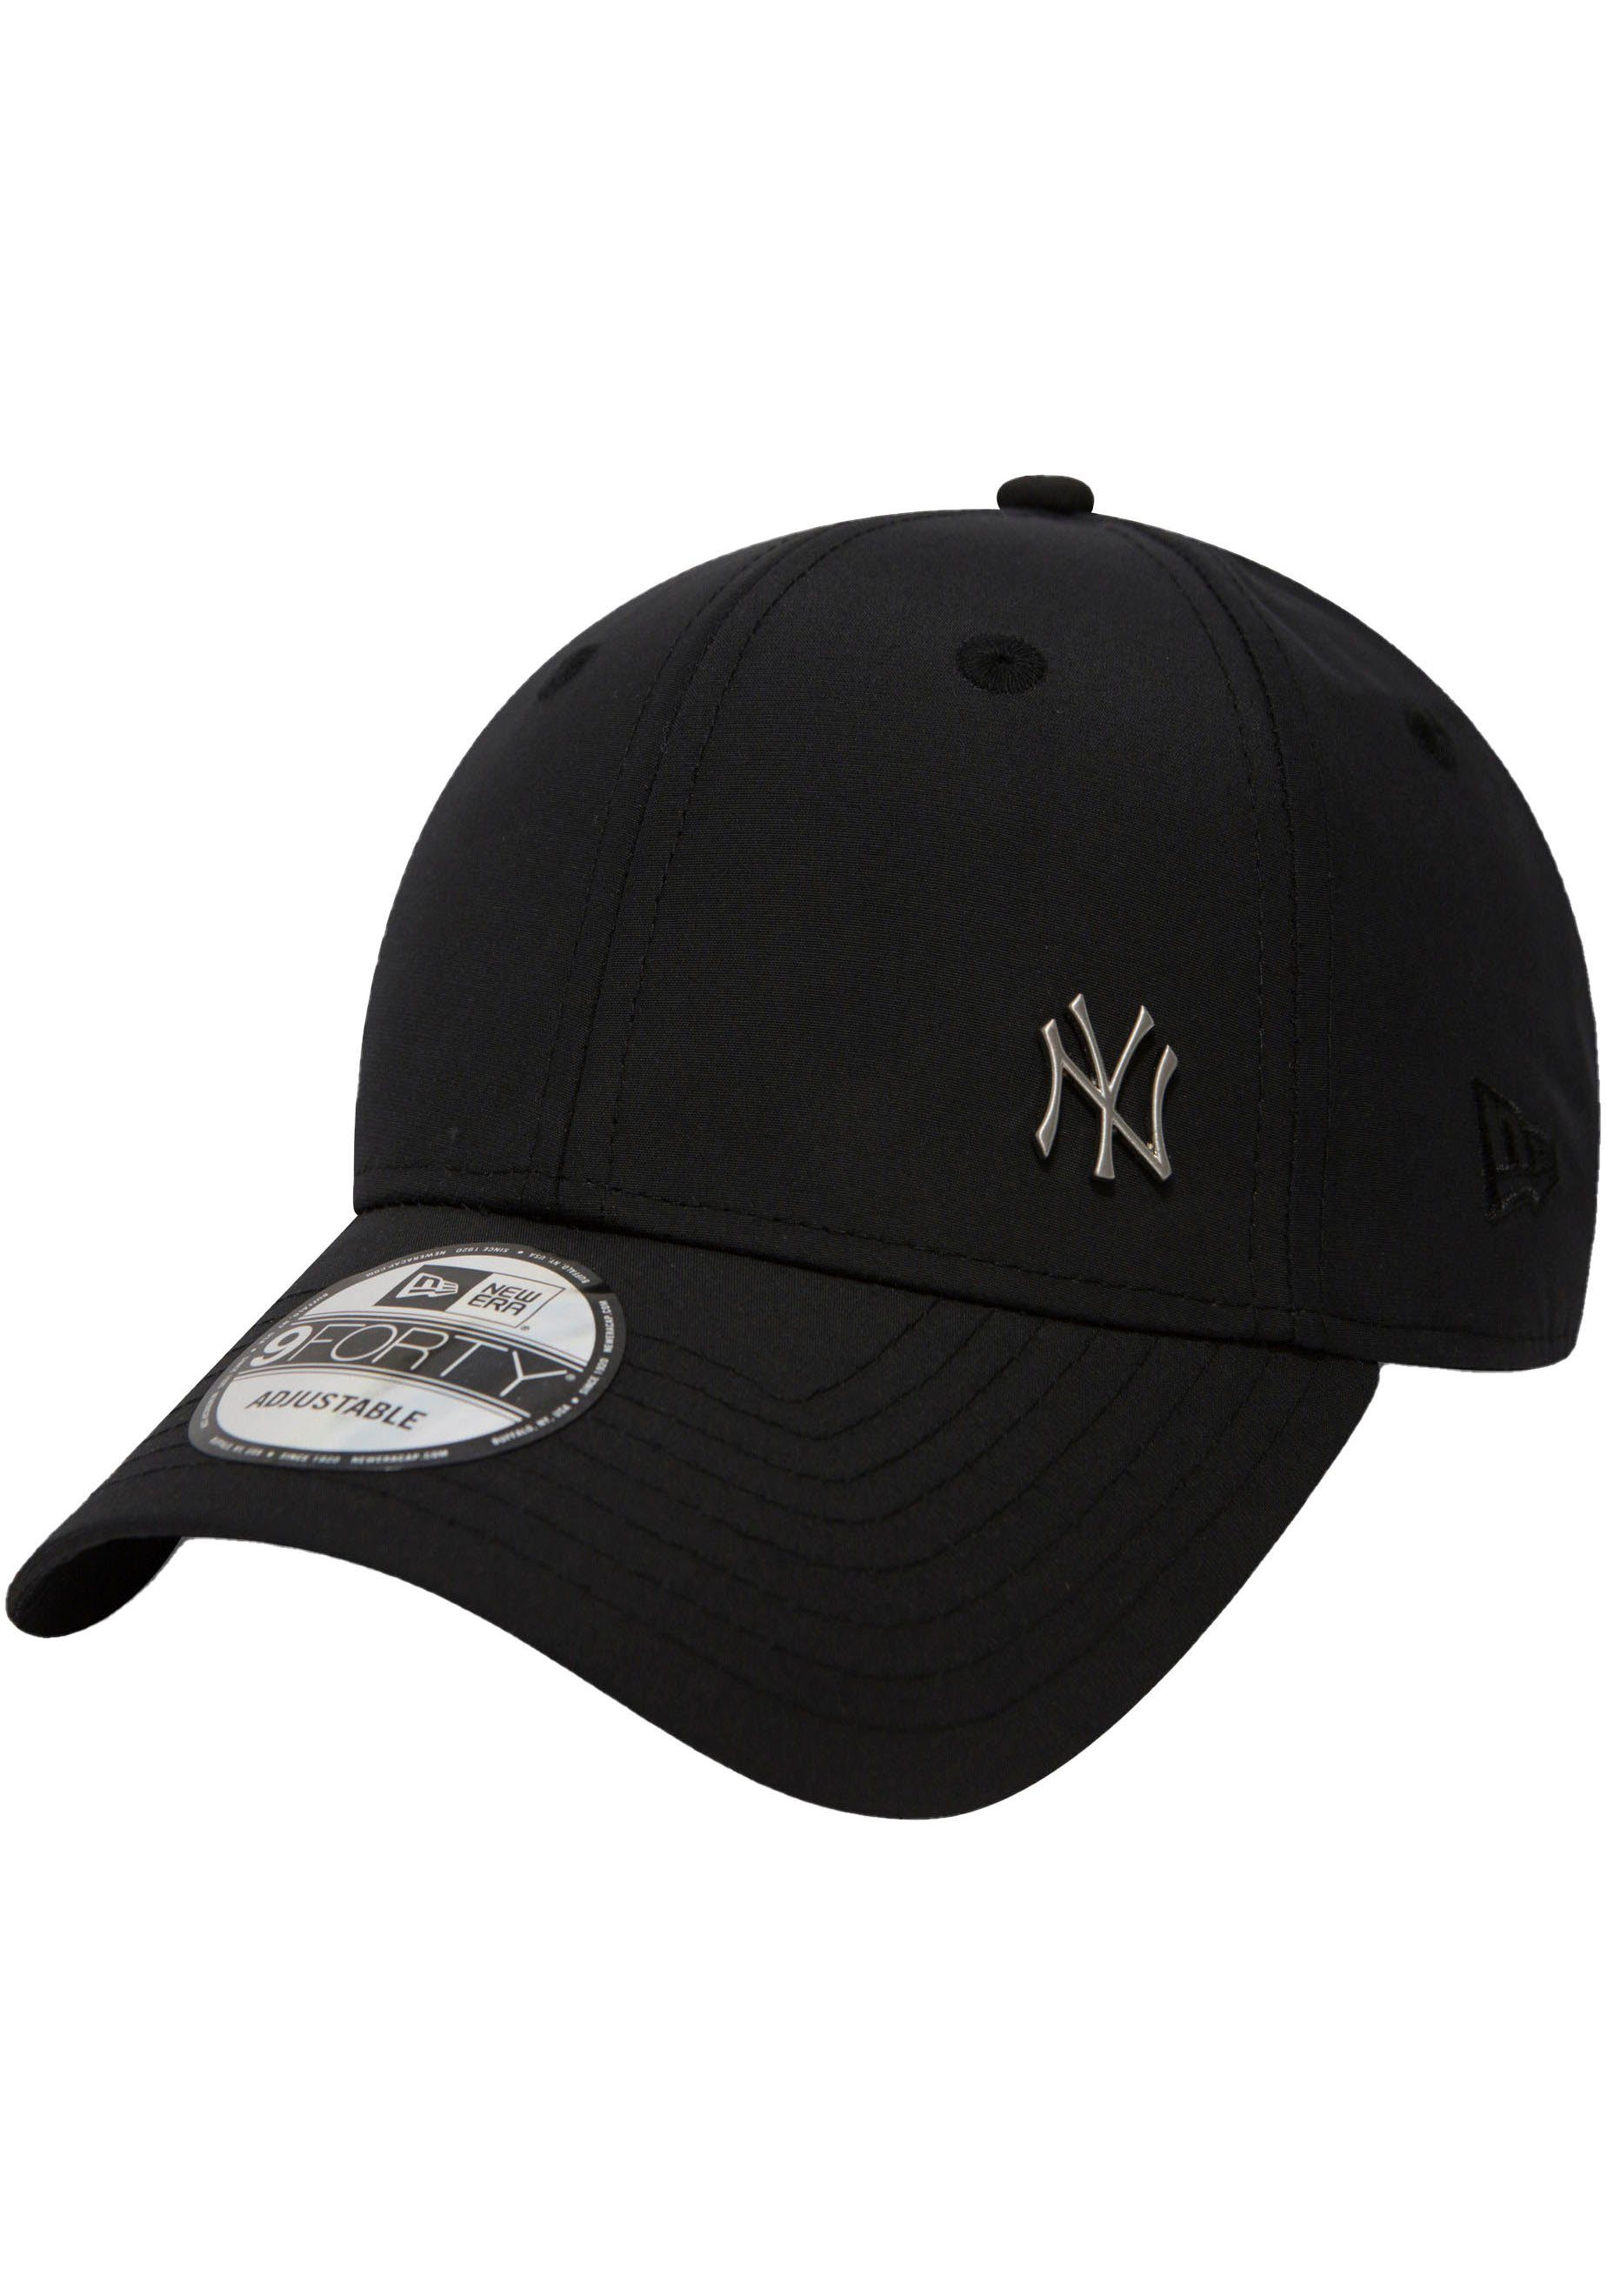 New Era Baseball Cap Basecap NEW YORK YANKEES schwarz